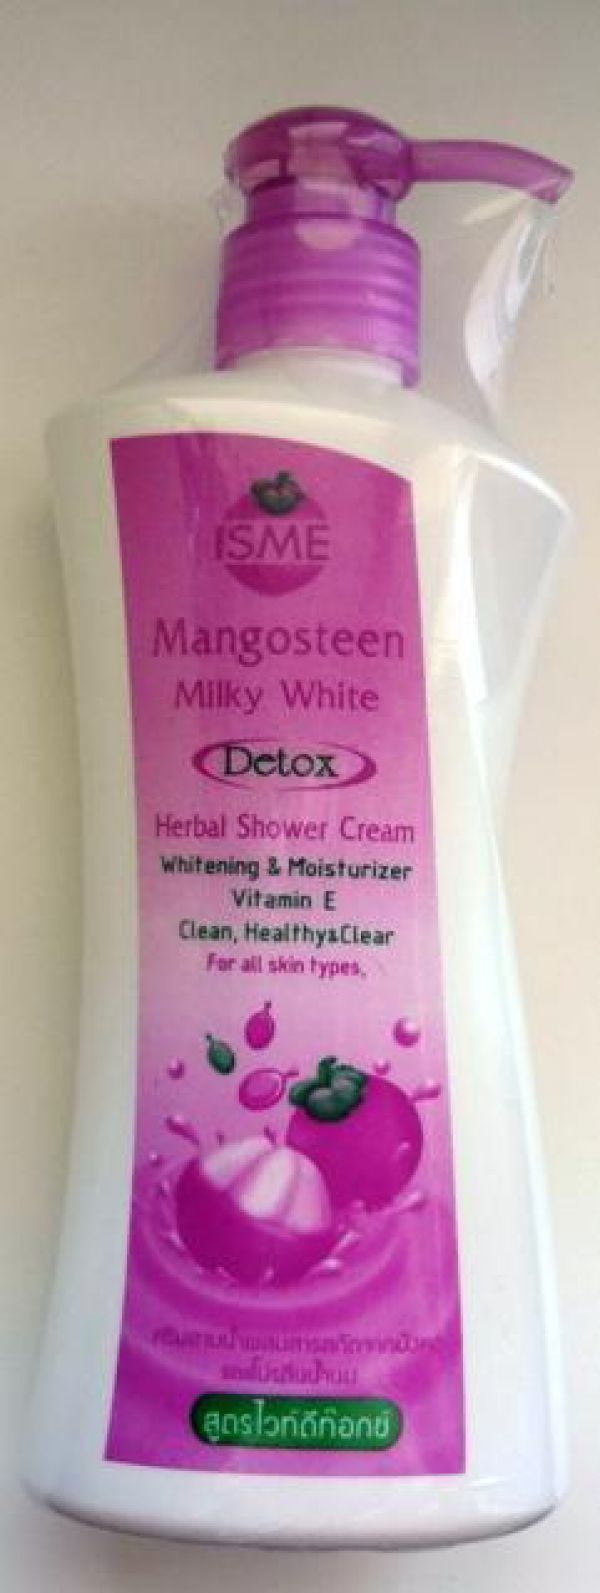 Isme Mangosteen Herbal Shower Cream 200г